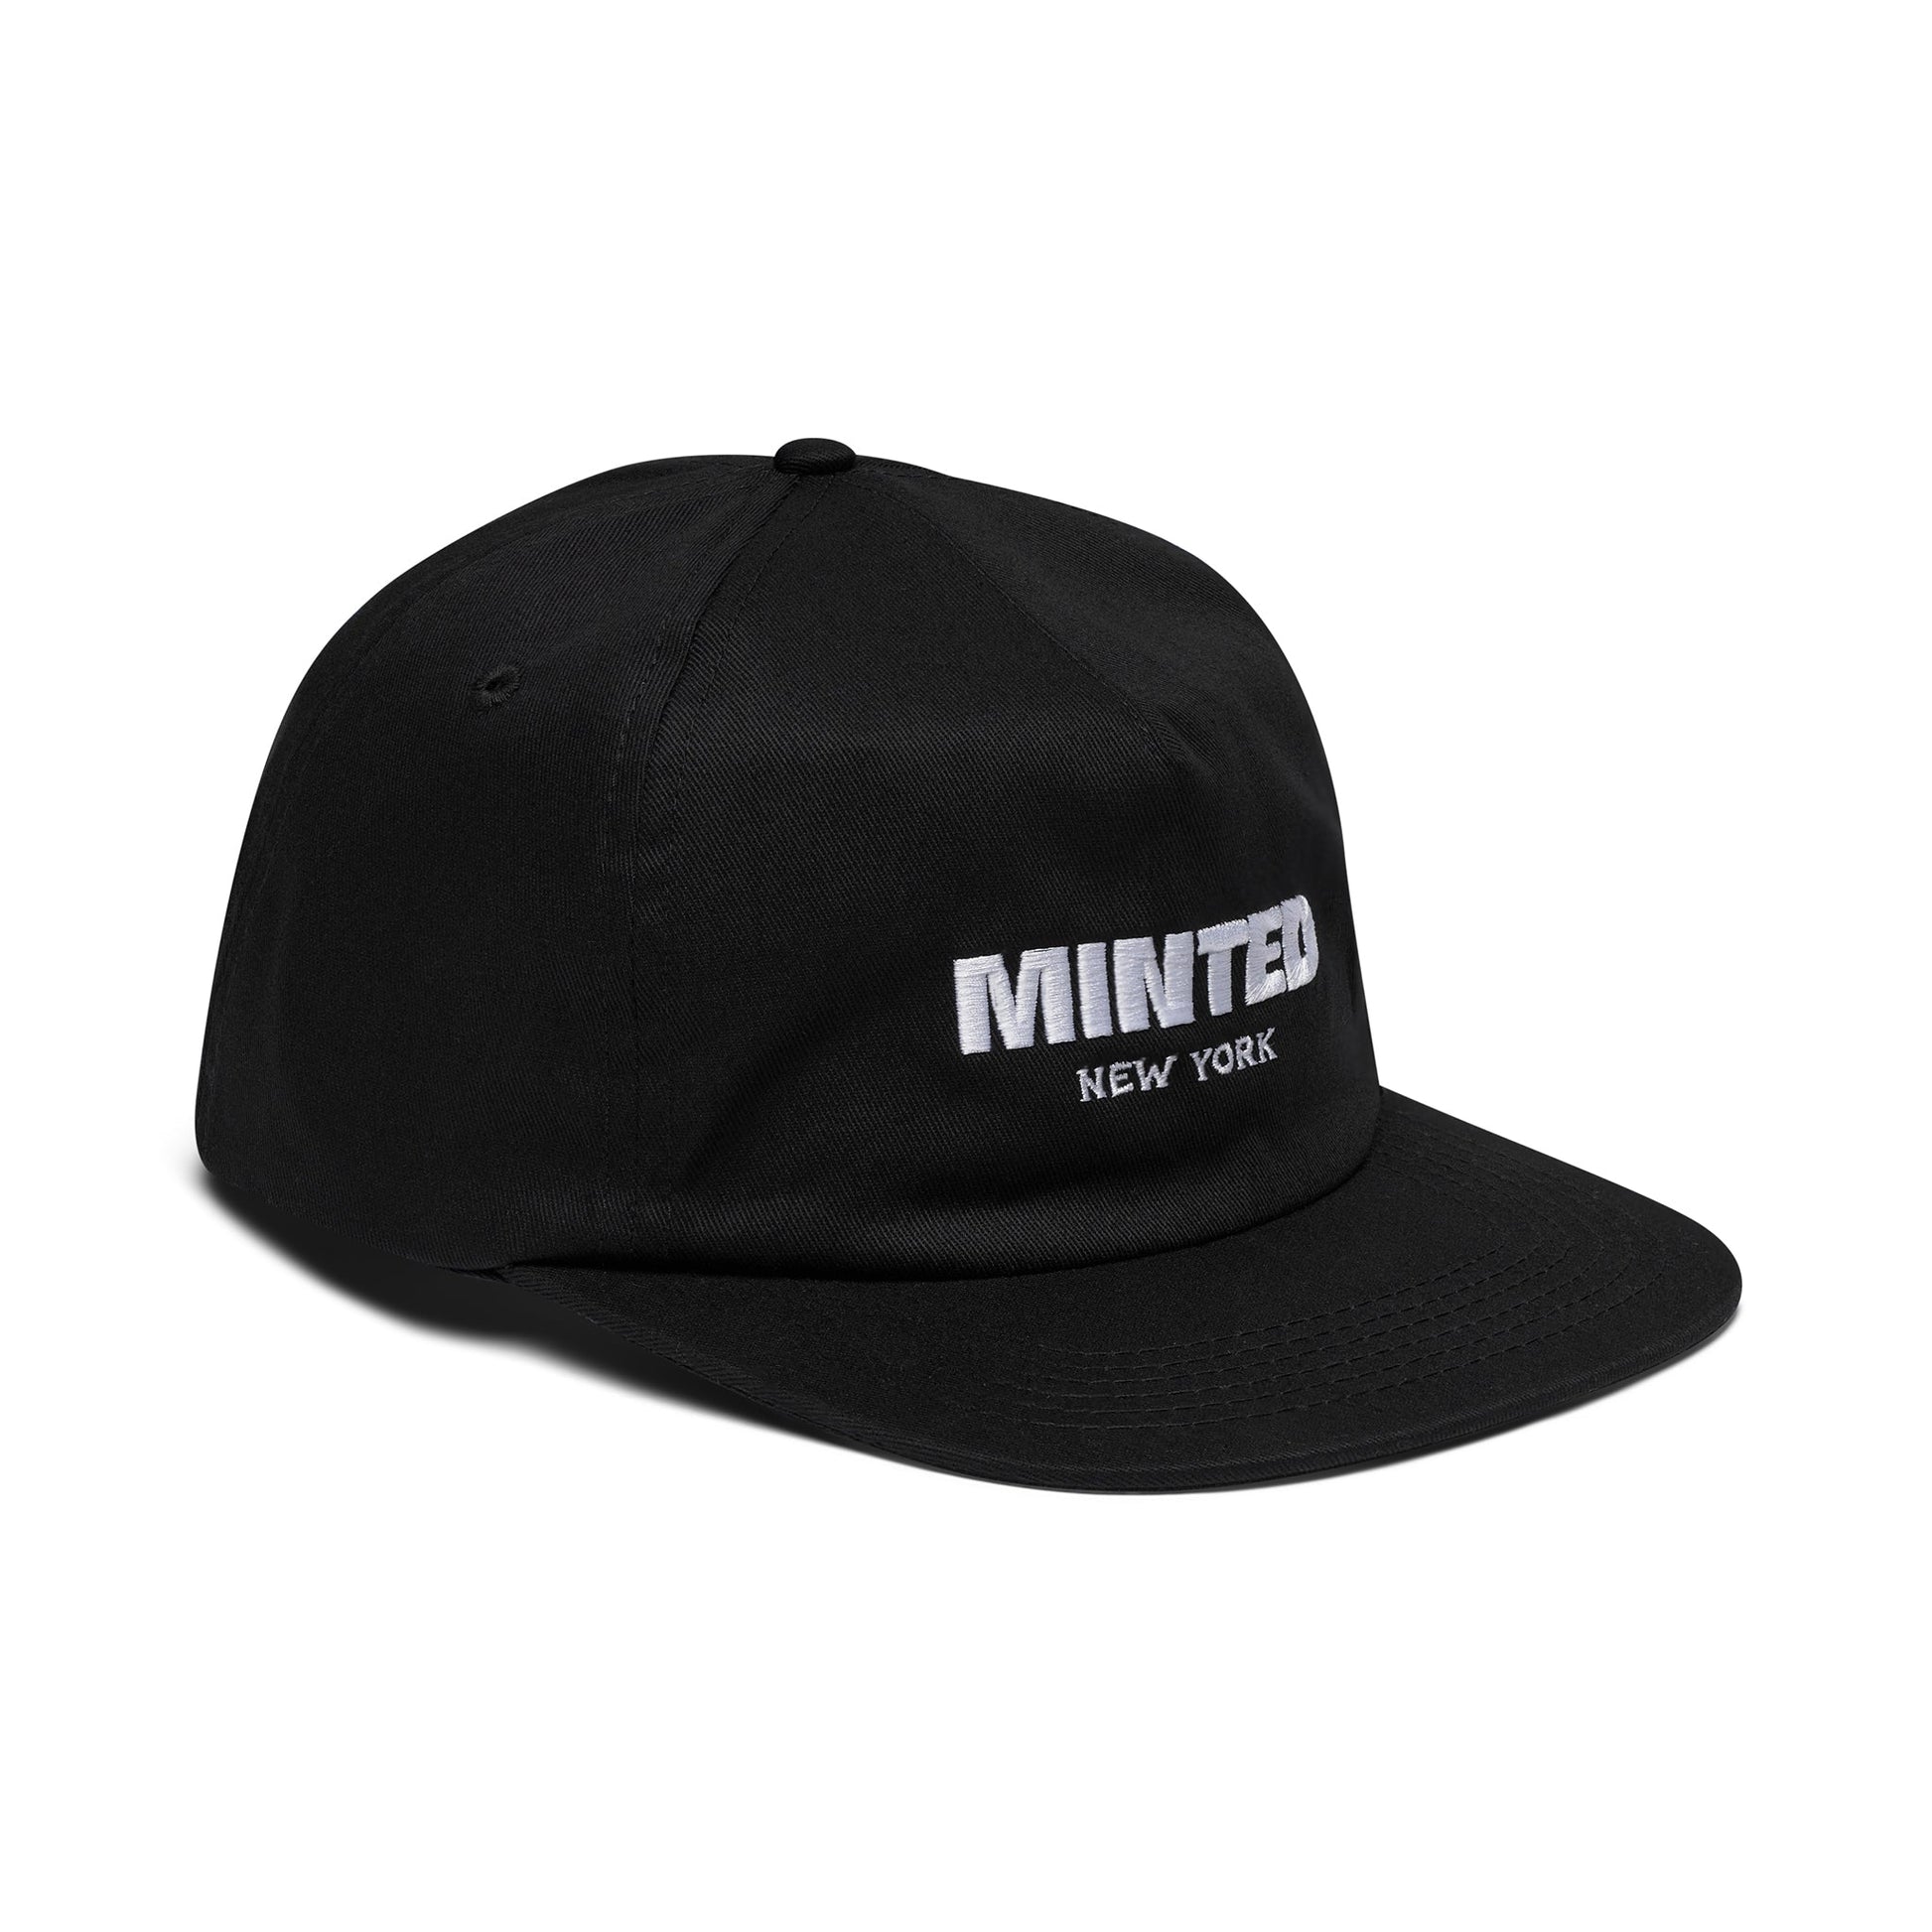 Black Work Hat – Minted New York